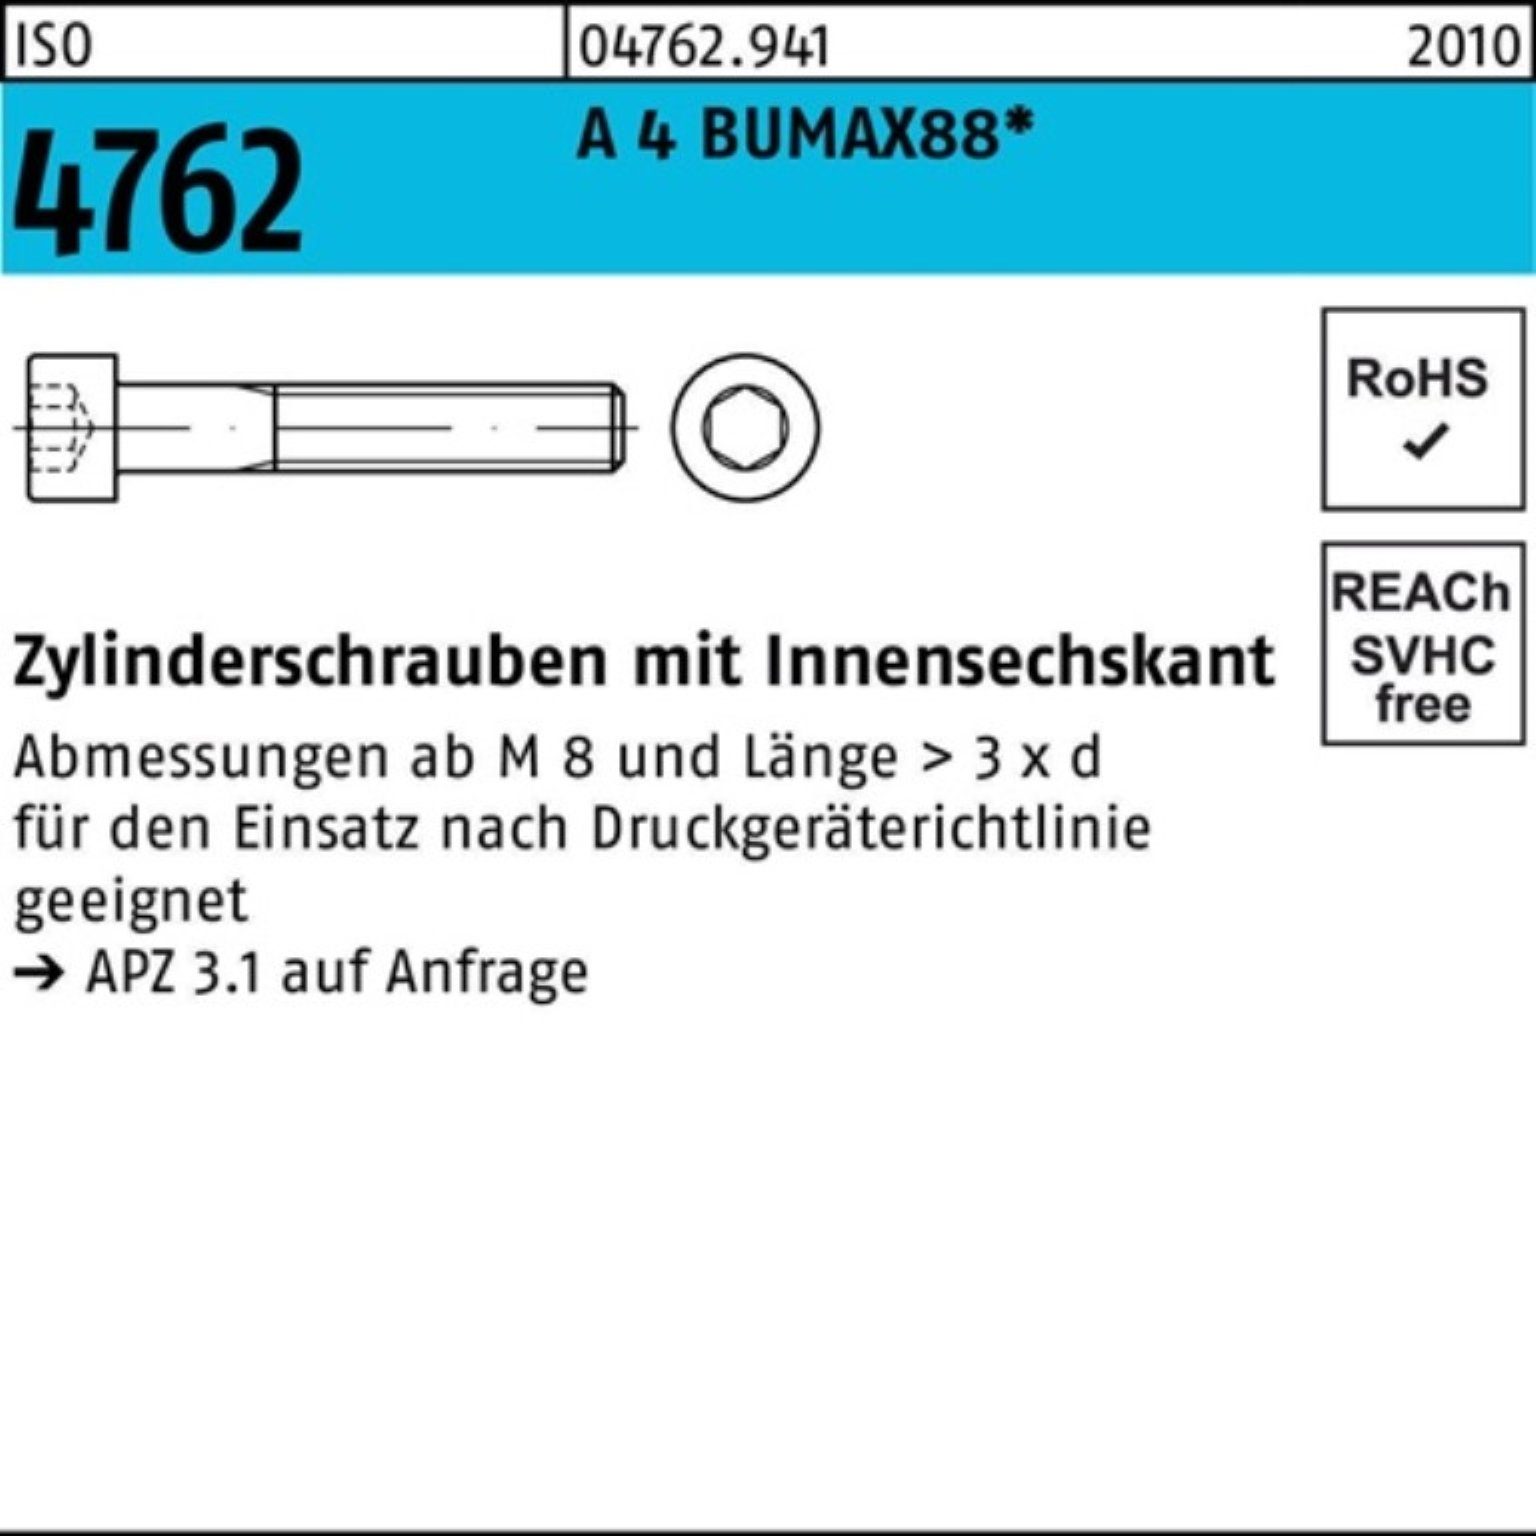 Bufab Zylinderschraube 100er Pack Zylinderschraube ISO 4762 Innen-6kt M5x 50 A 4 BUMAX88 100